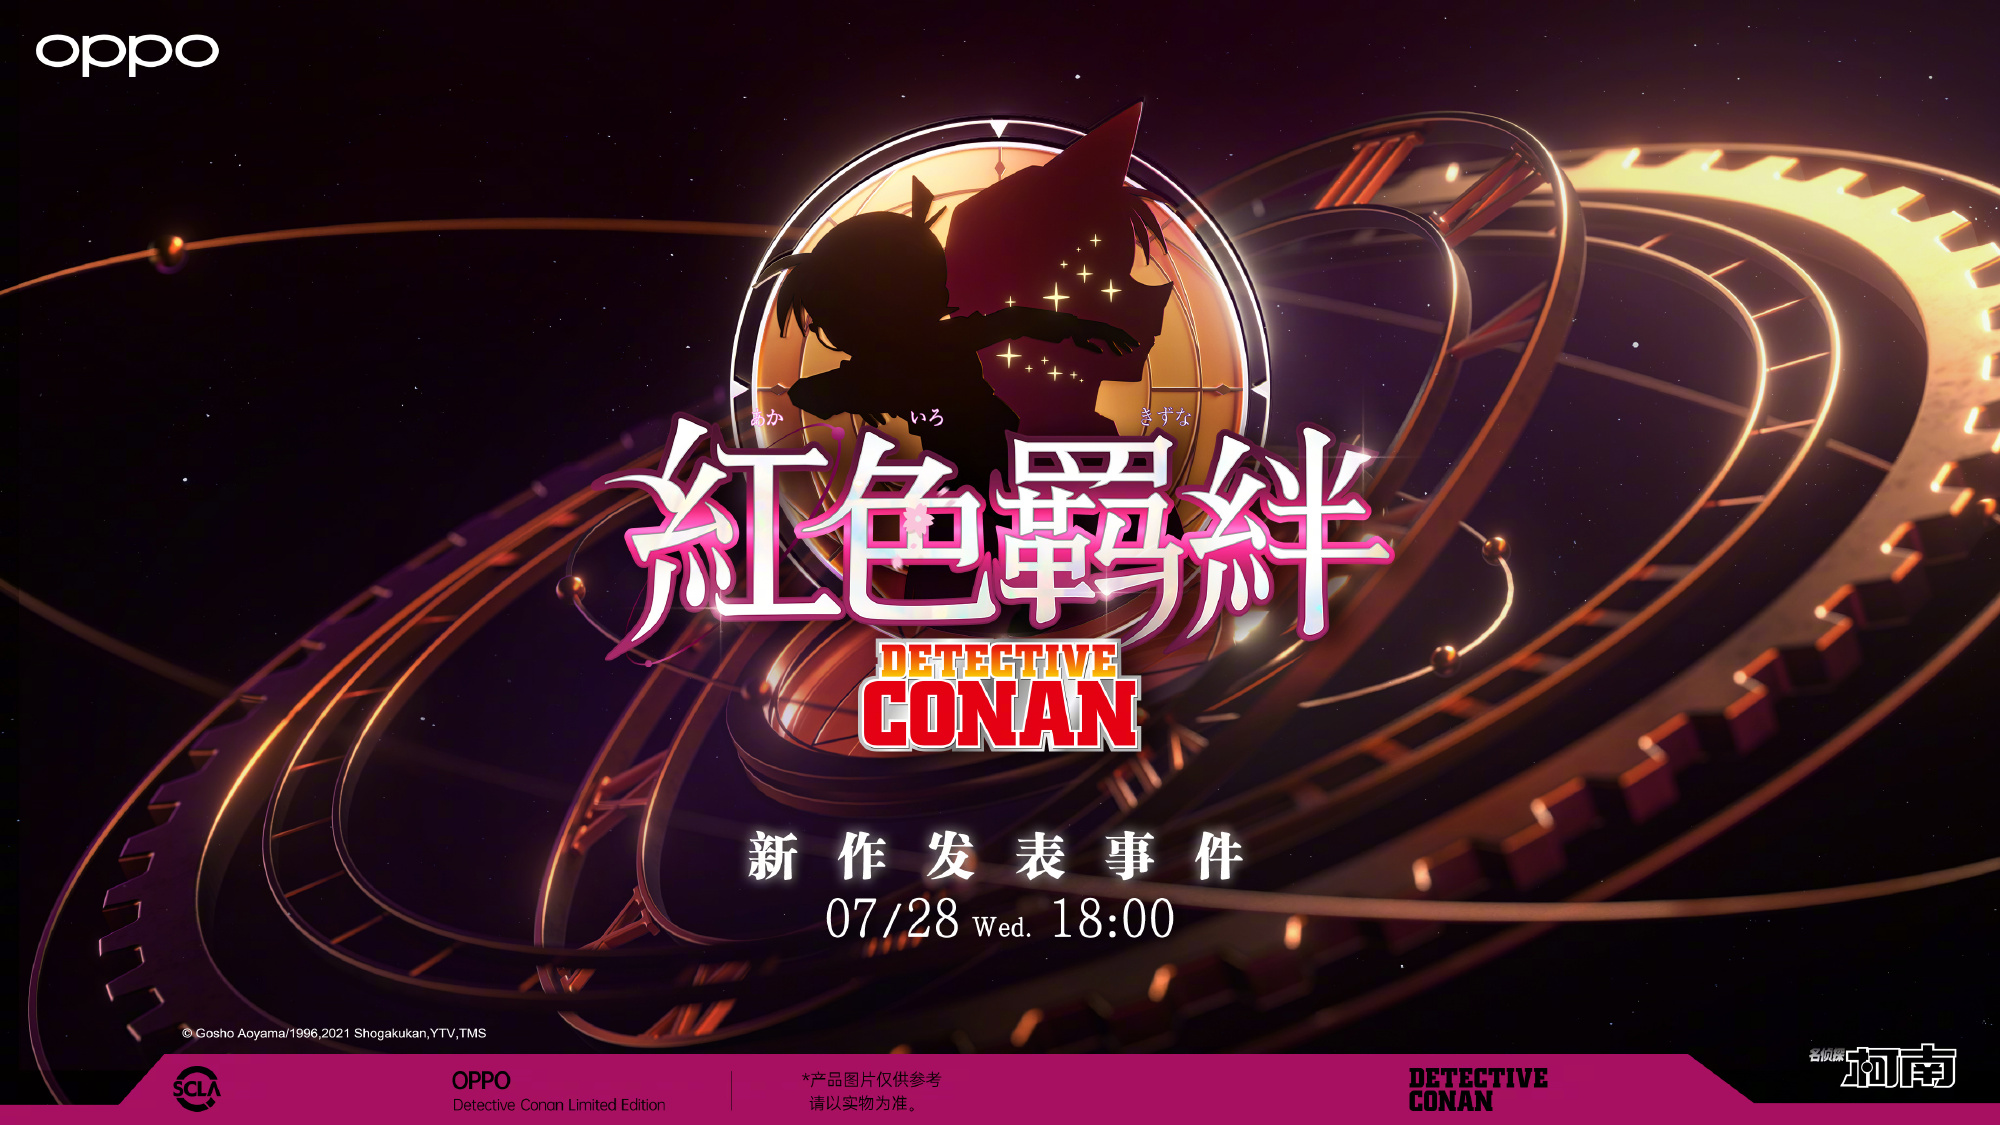 OPPO Detective Conan Limited Edition